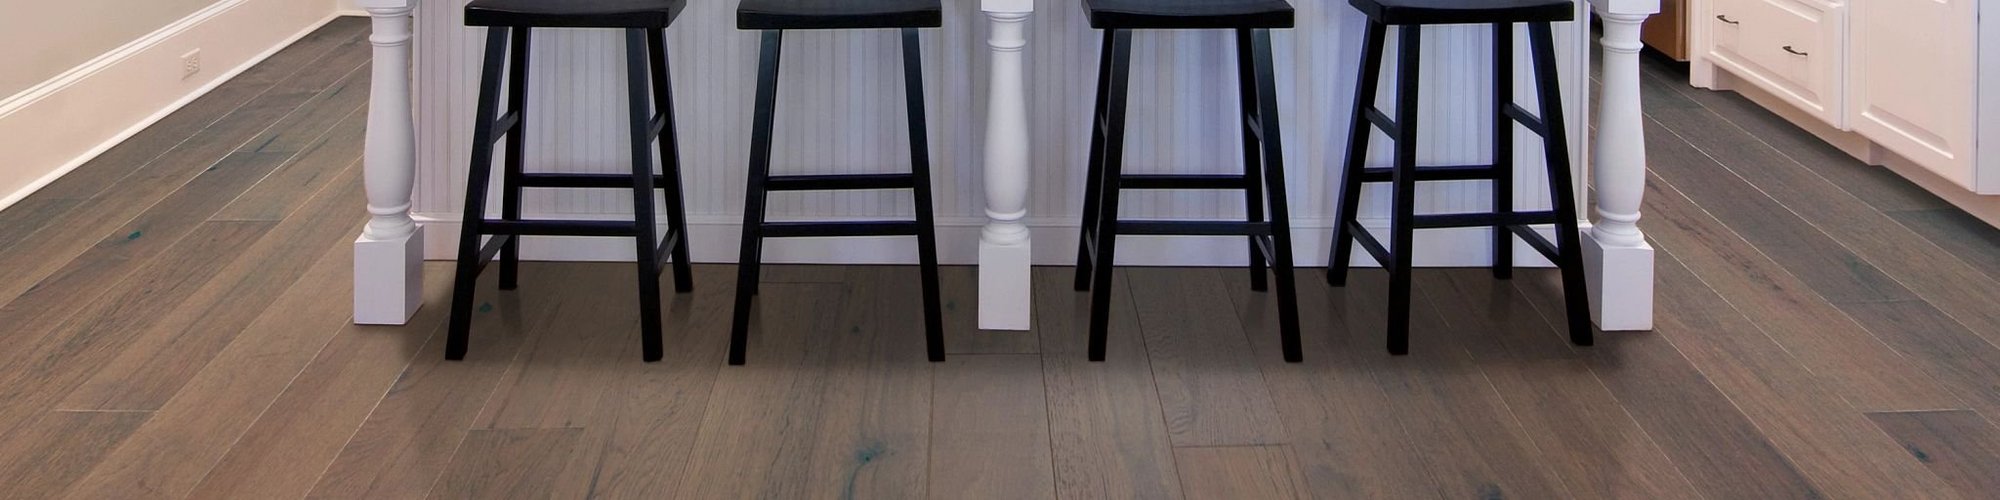 bar stools in kitchen with hardwood flooring